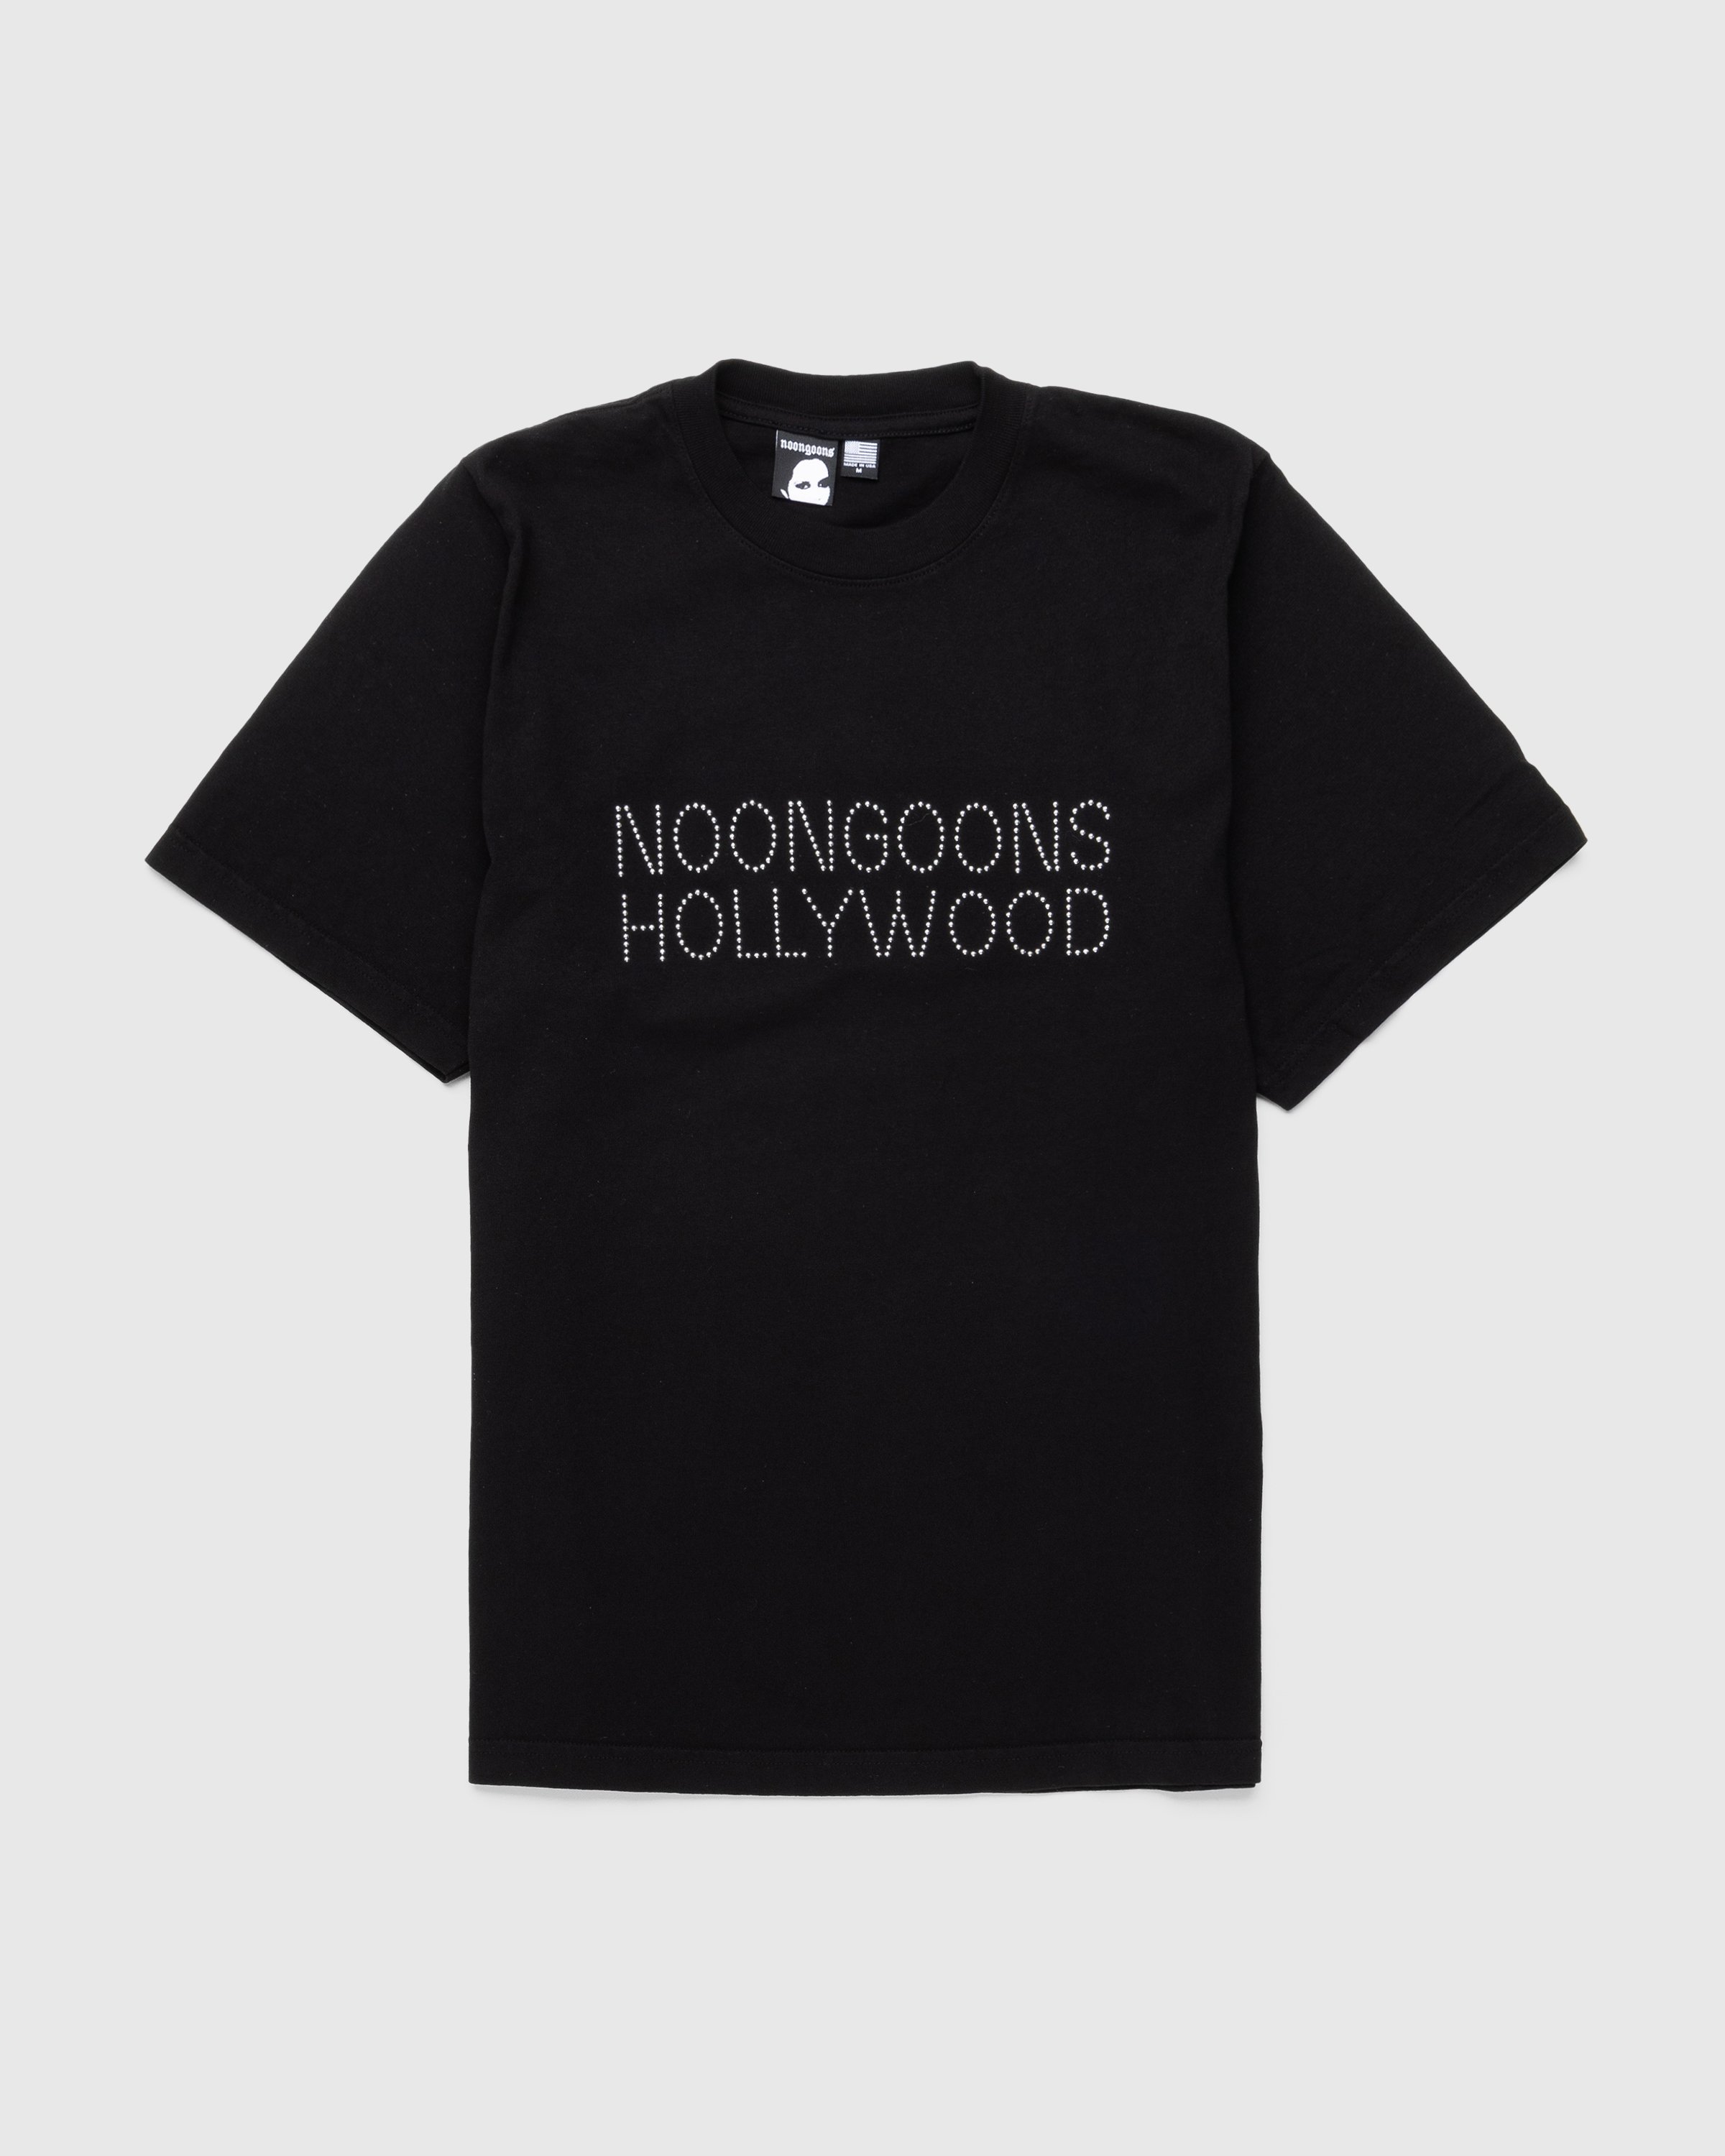 Noon Goons - Hollyweird T-Shirt Black - Clothing - Black - Image 1